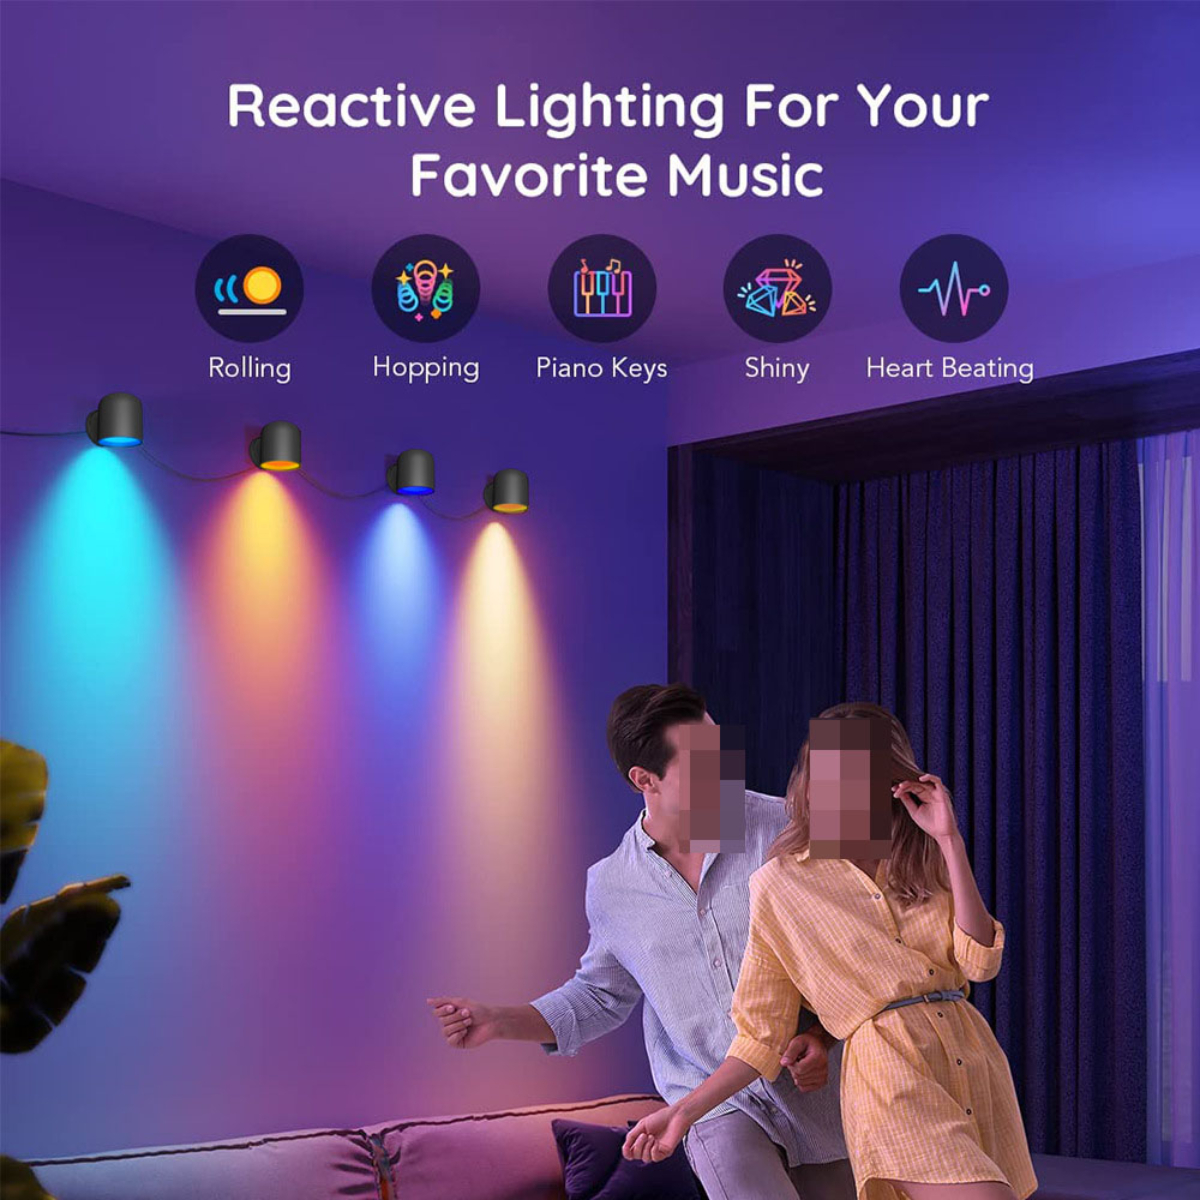 LACAMAX Sechs installierte Gelb RGB-Leuchtfarben, Schwarz, - Bluetooth-Verbindung Weiß, LED-Wandleuchten Beleuchtung, Deko